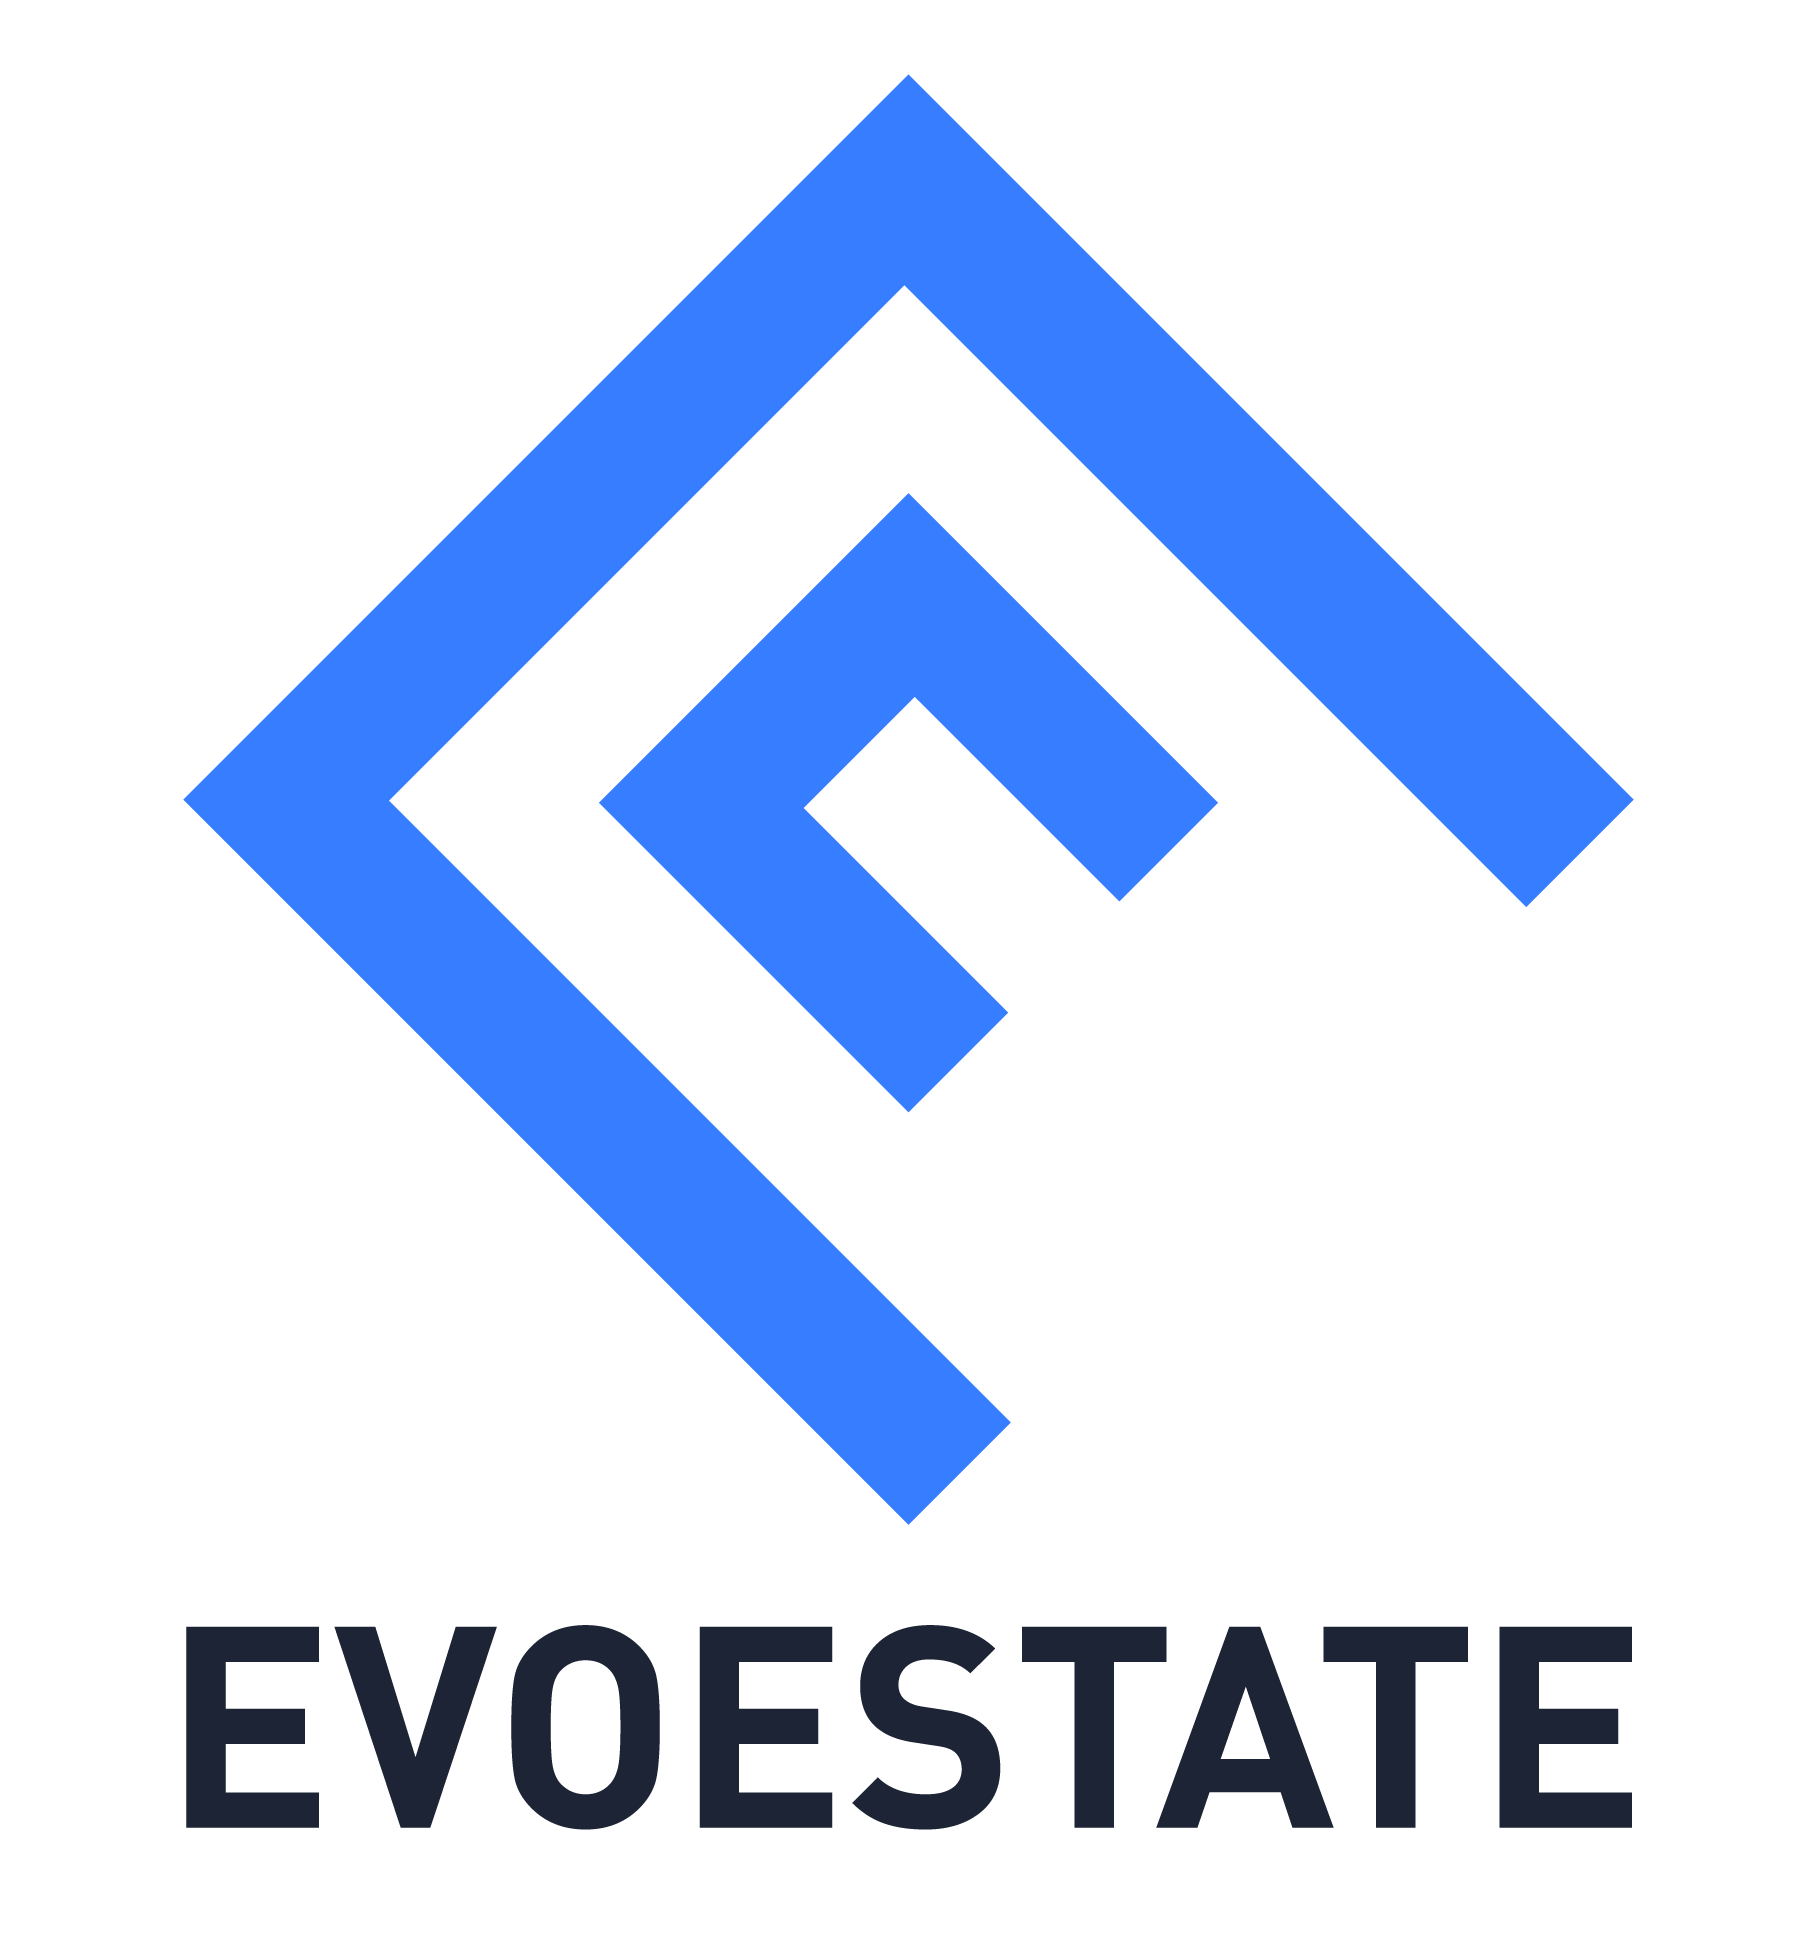 EvoEstate's logo